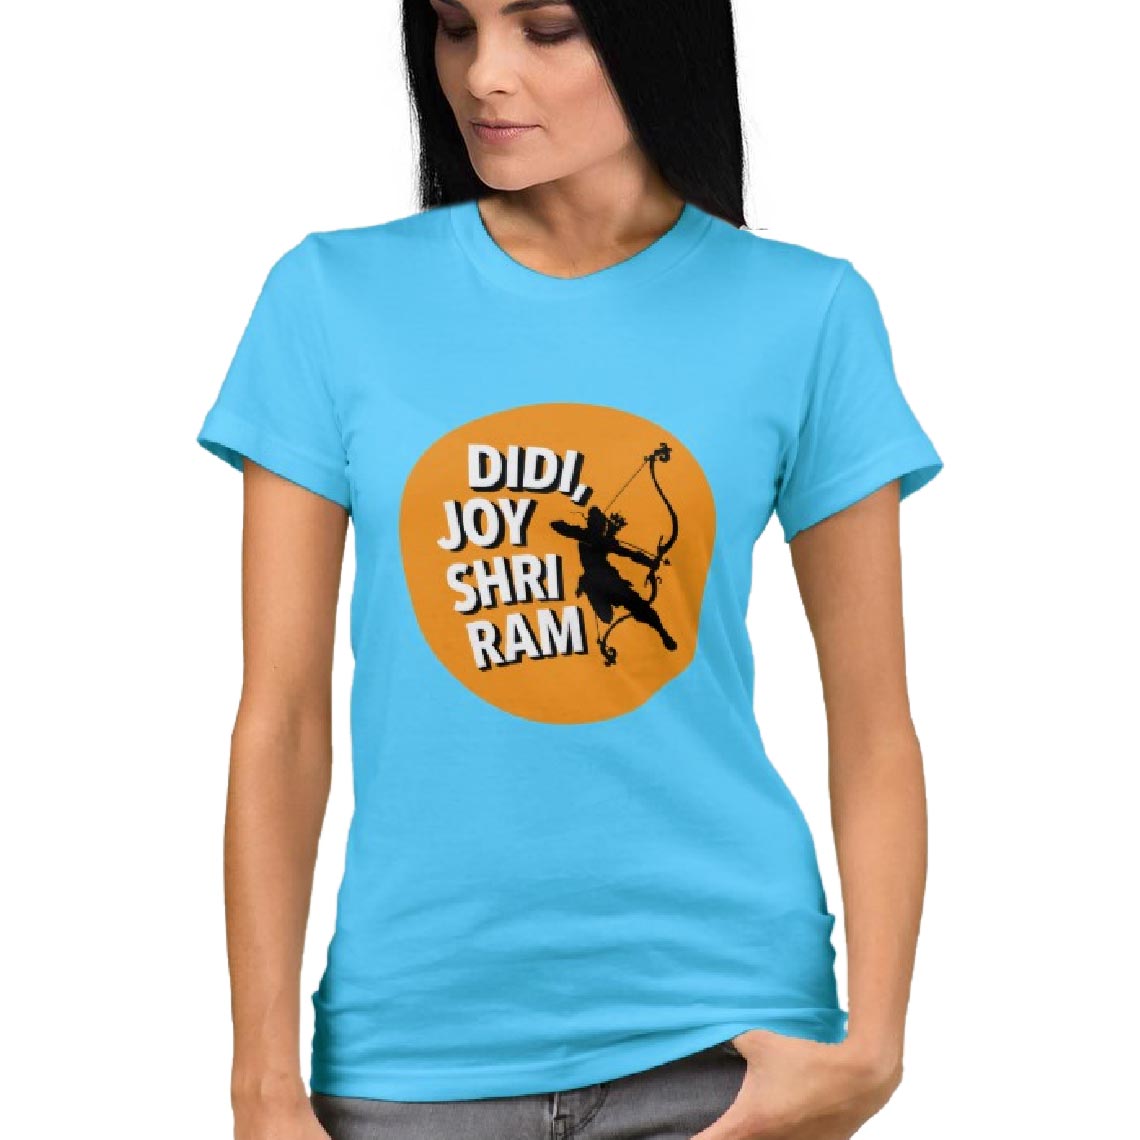 Didi, Joy Shri Ram! – T shirt (Women) Rs. 399/ – Capistan Club